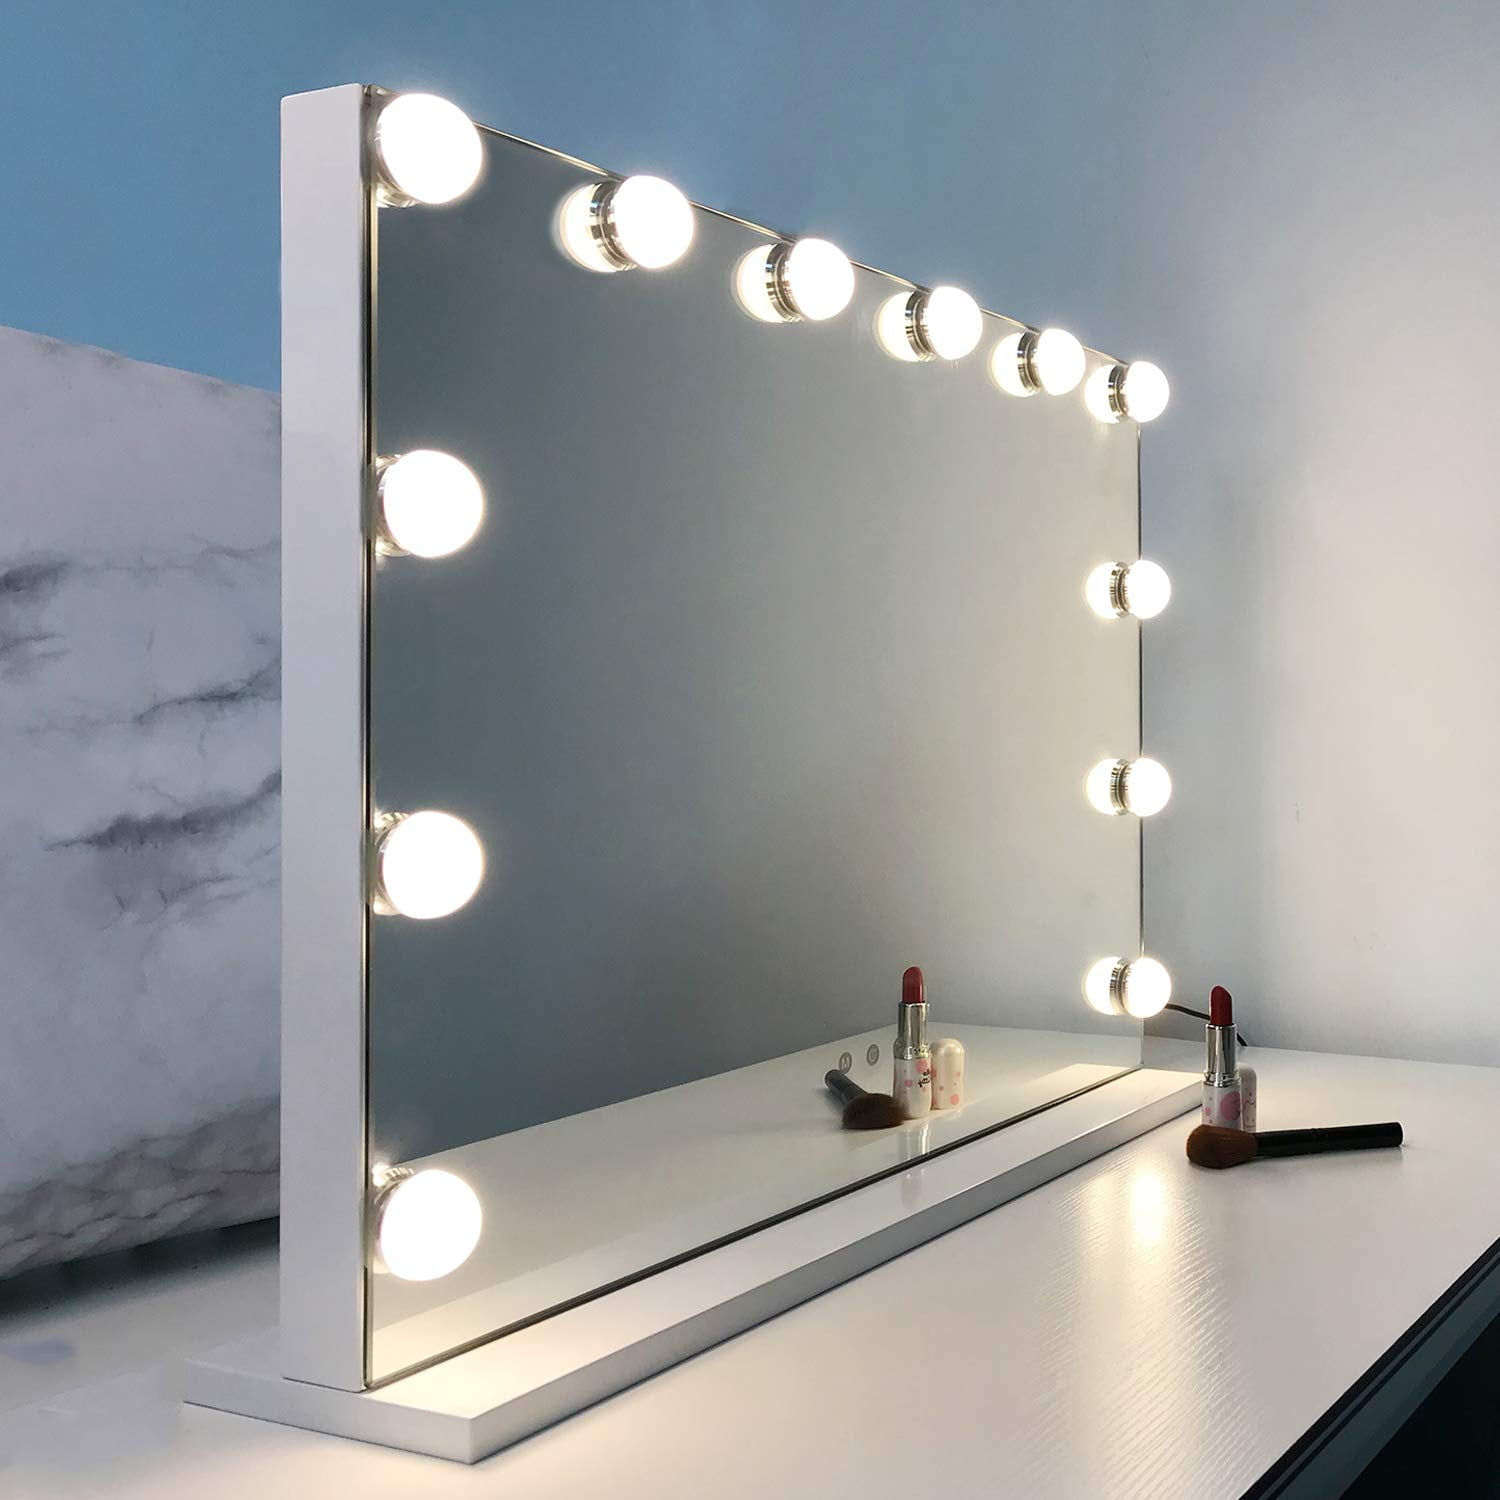 Wayking Vanity Mirror With Lights, Small Cream Vanity Mirror With Lights And Bluetooth Speaker